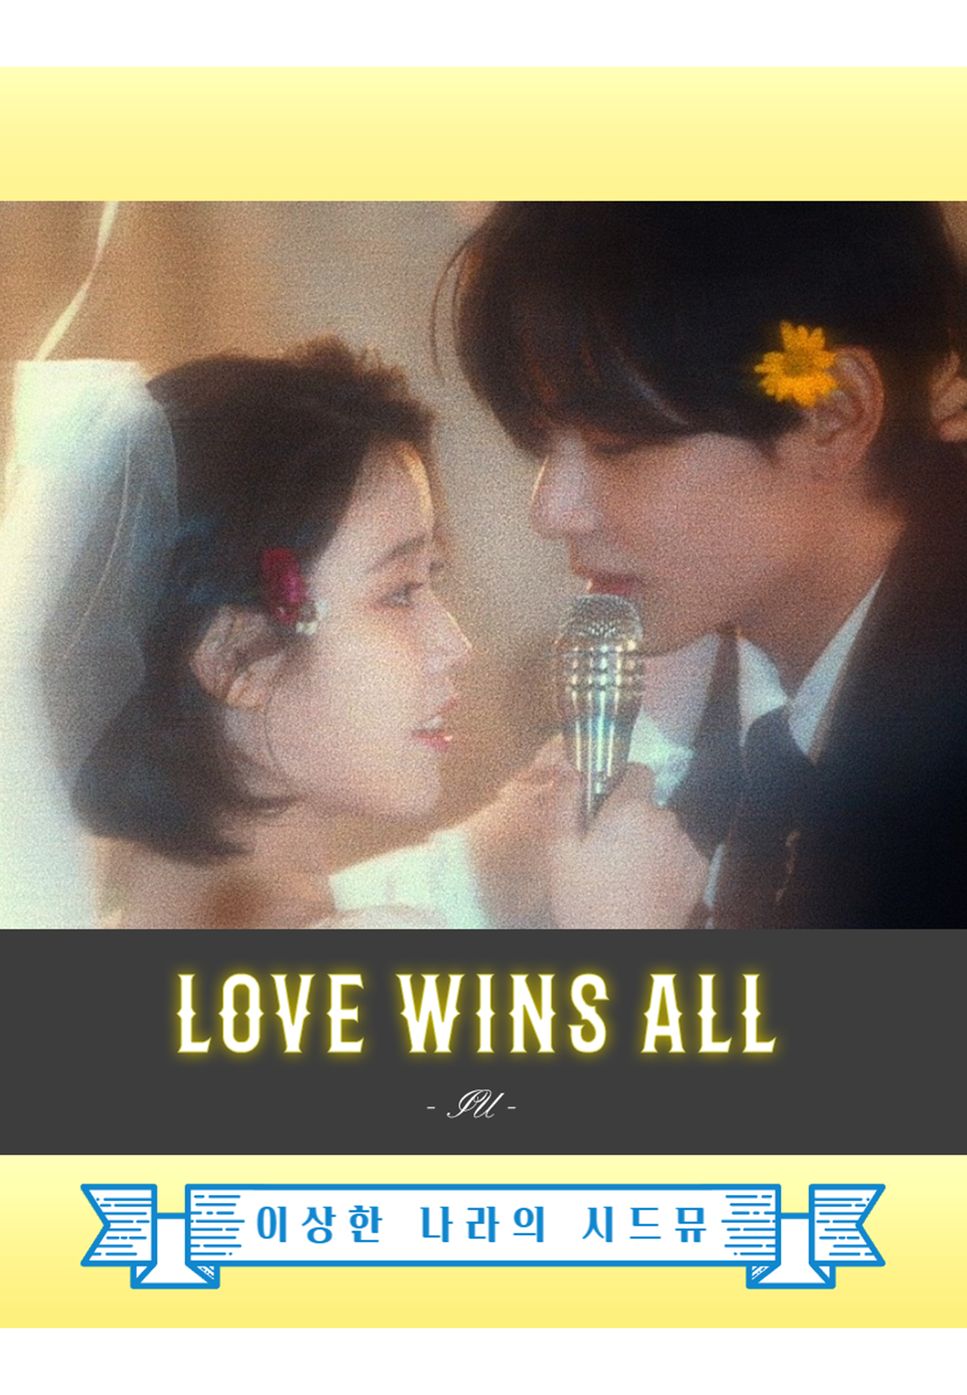 IU - Love wins all by Moonlight Garden